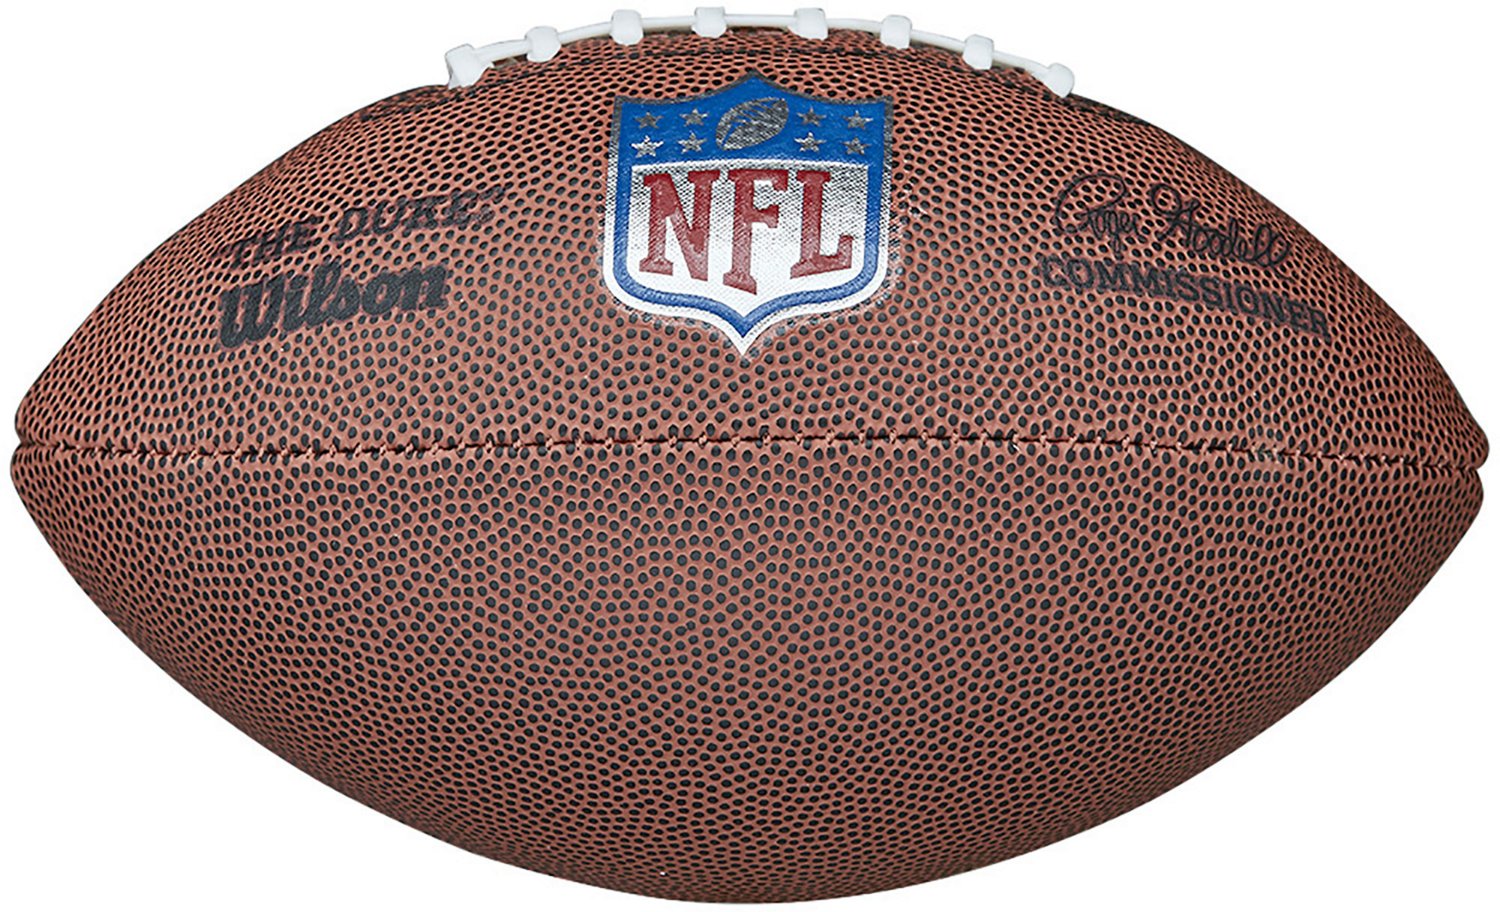 Wilson NFL Replica The Duke Mini Football